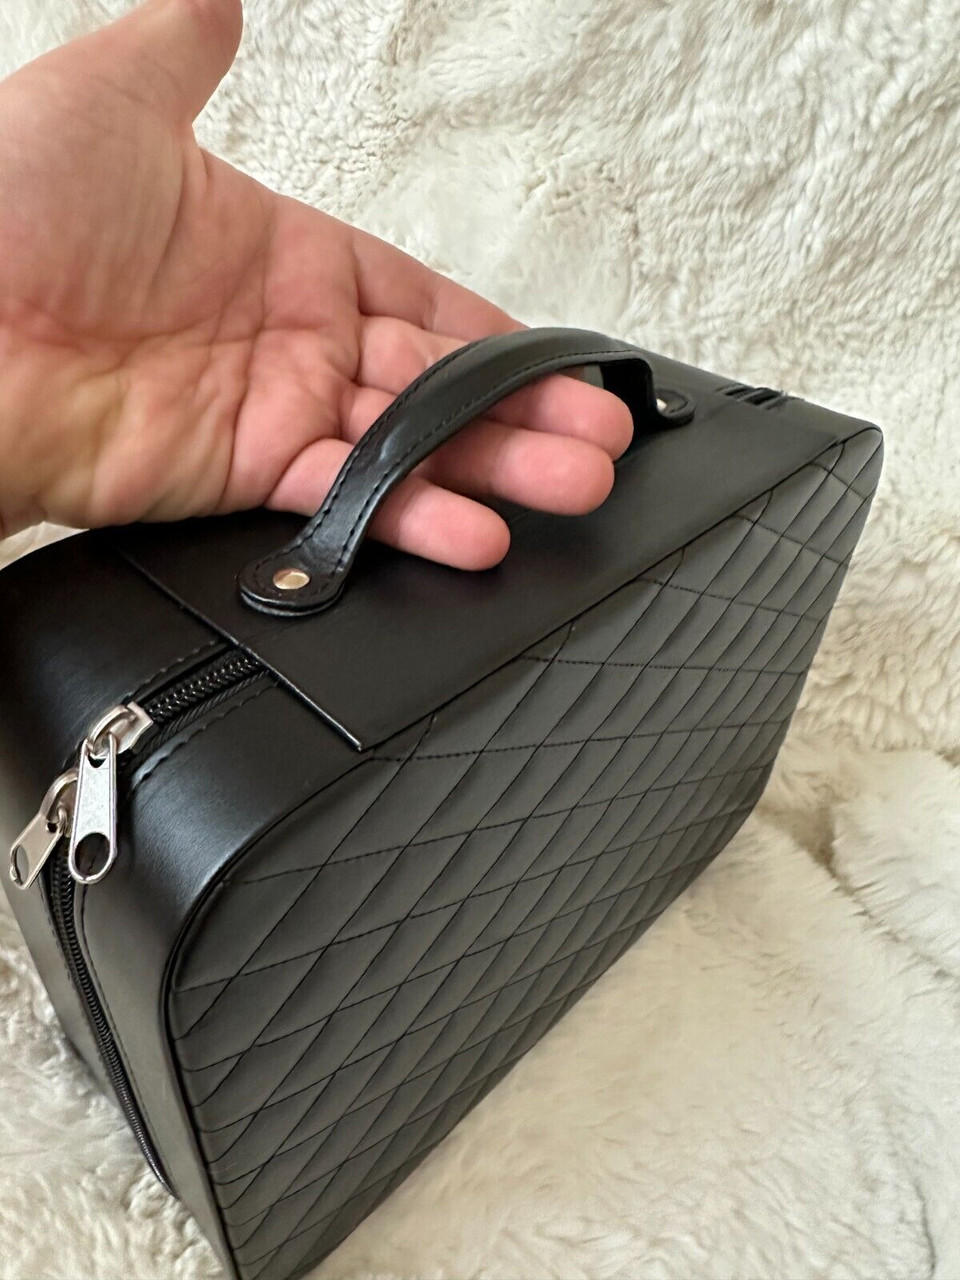 Harlembling Leather Travel Jewelry Box Case